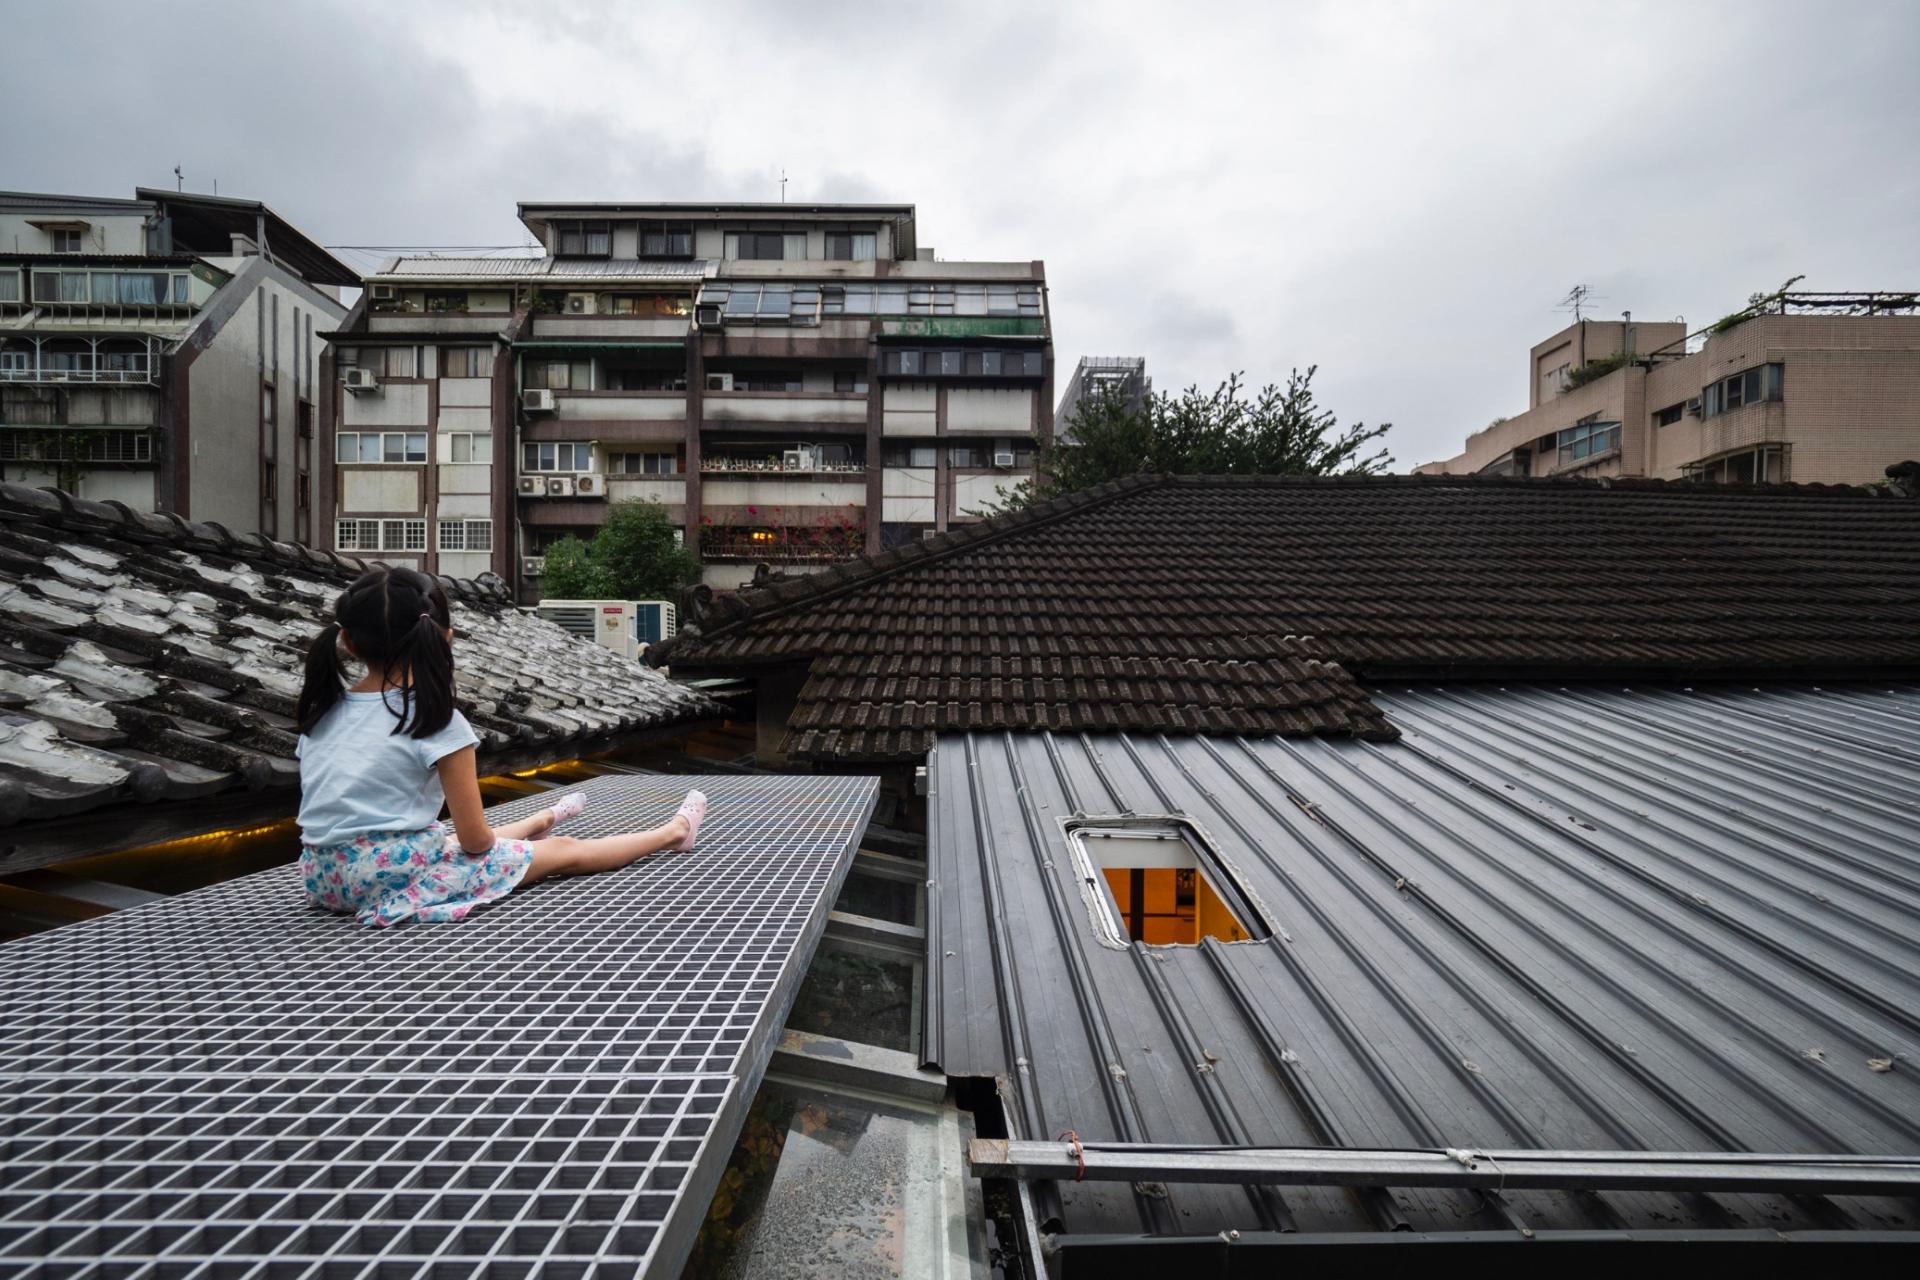 JCA Living Lab unpacks the harmonious life values of an aged Japanese-style dormitory